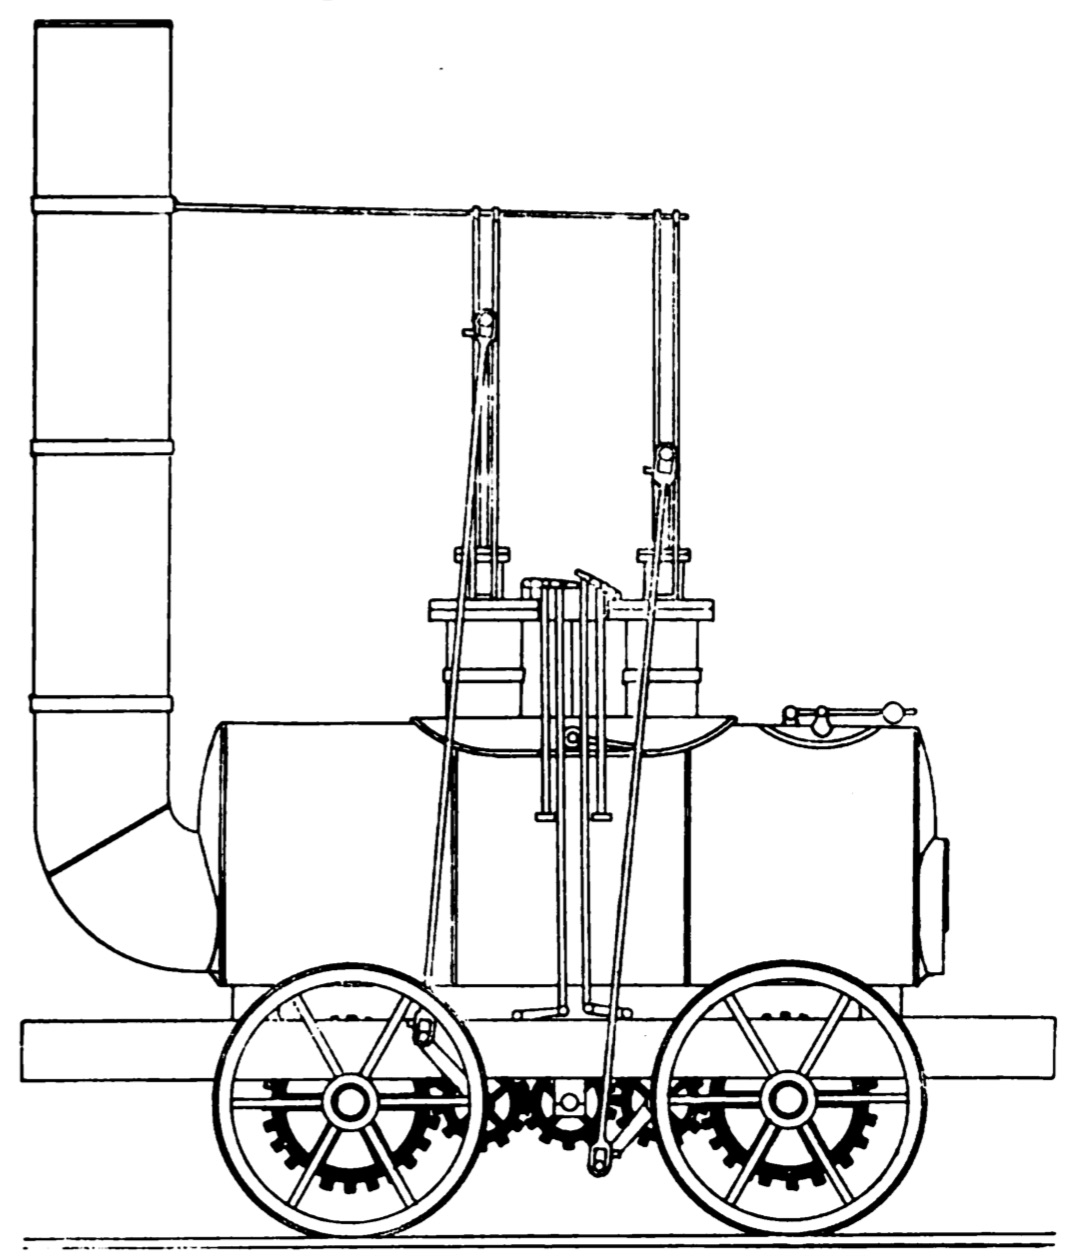 Image of Blücher locomotive, 1814